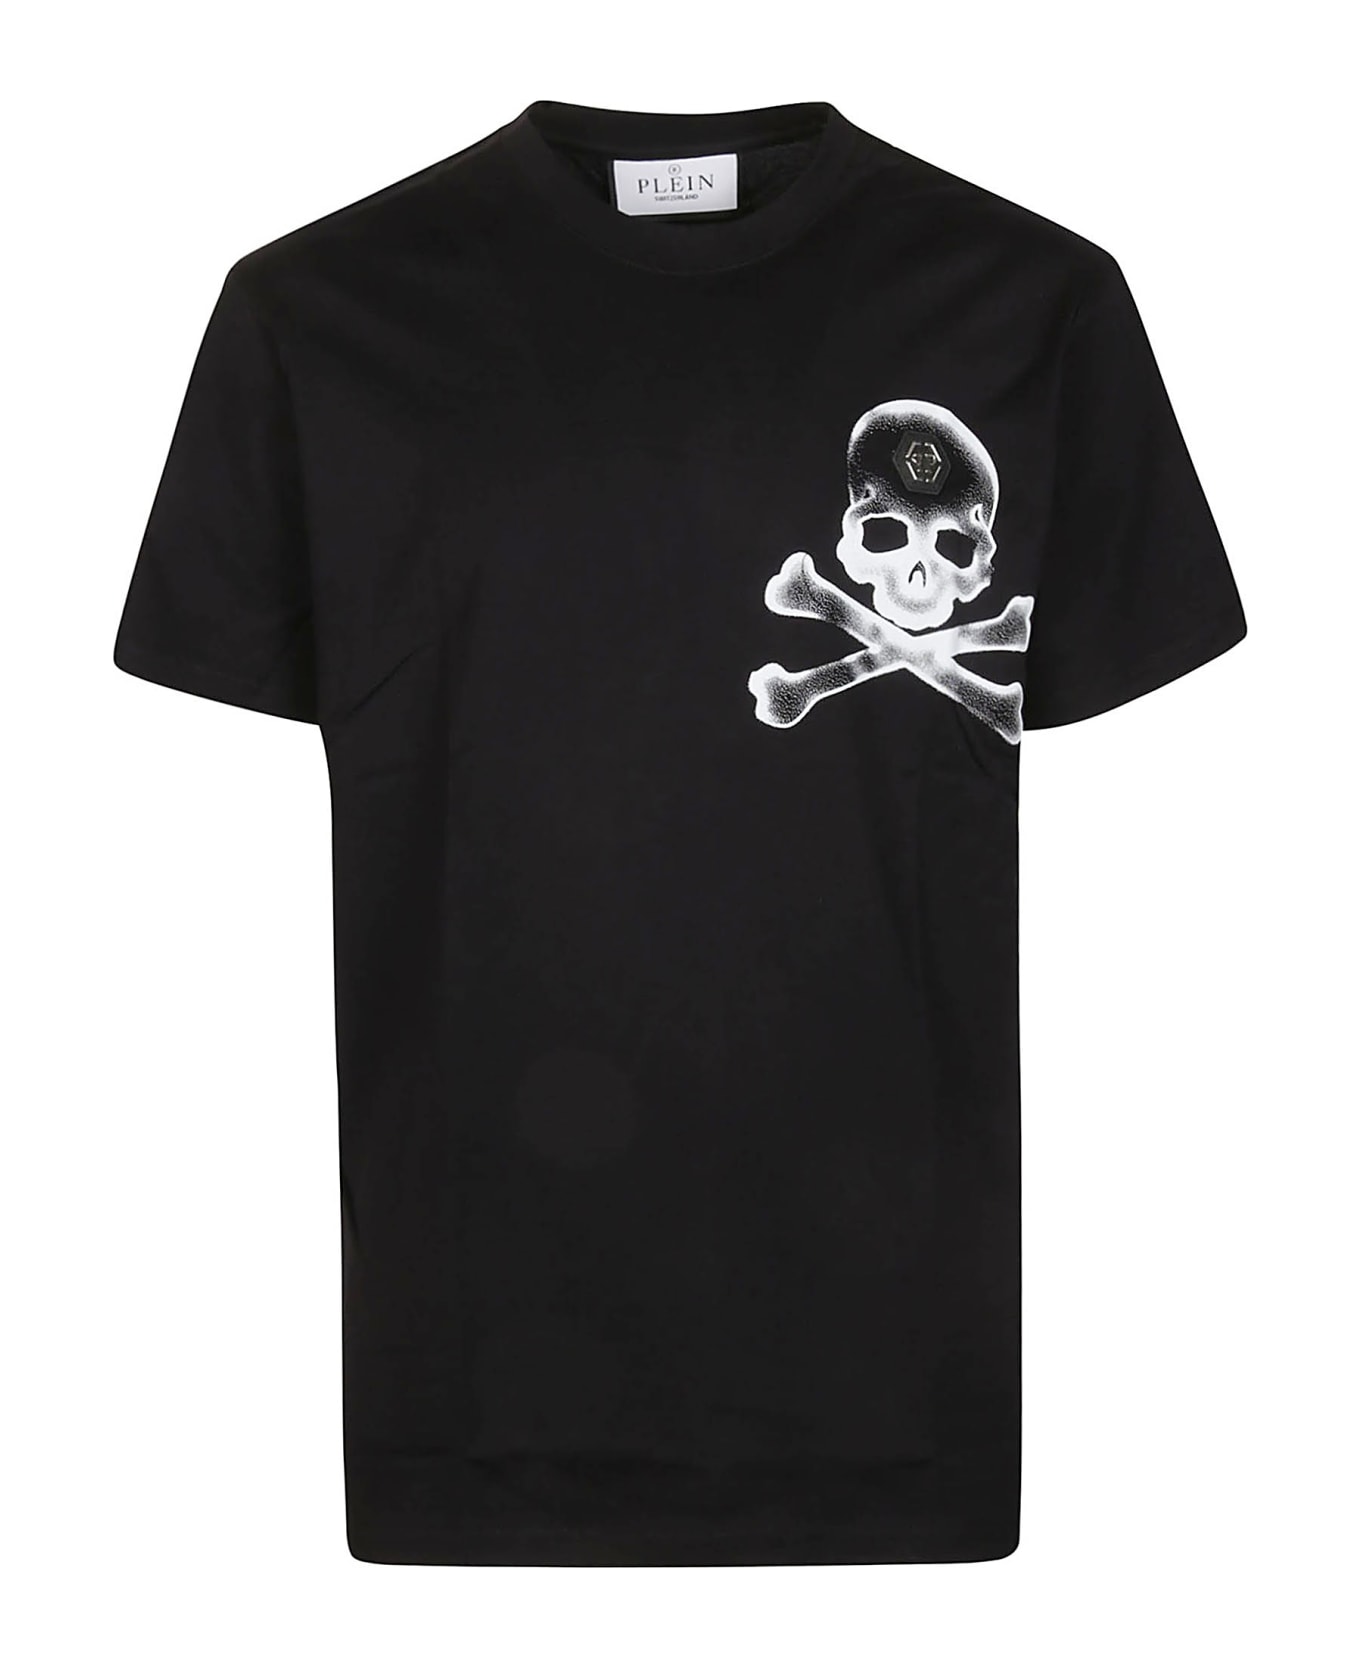 Philipp Plein Gothic Plein T-shirt - Black